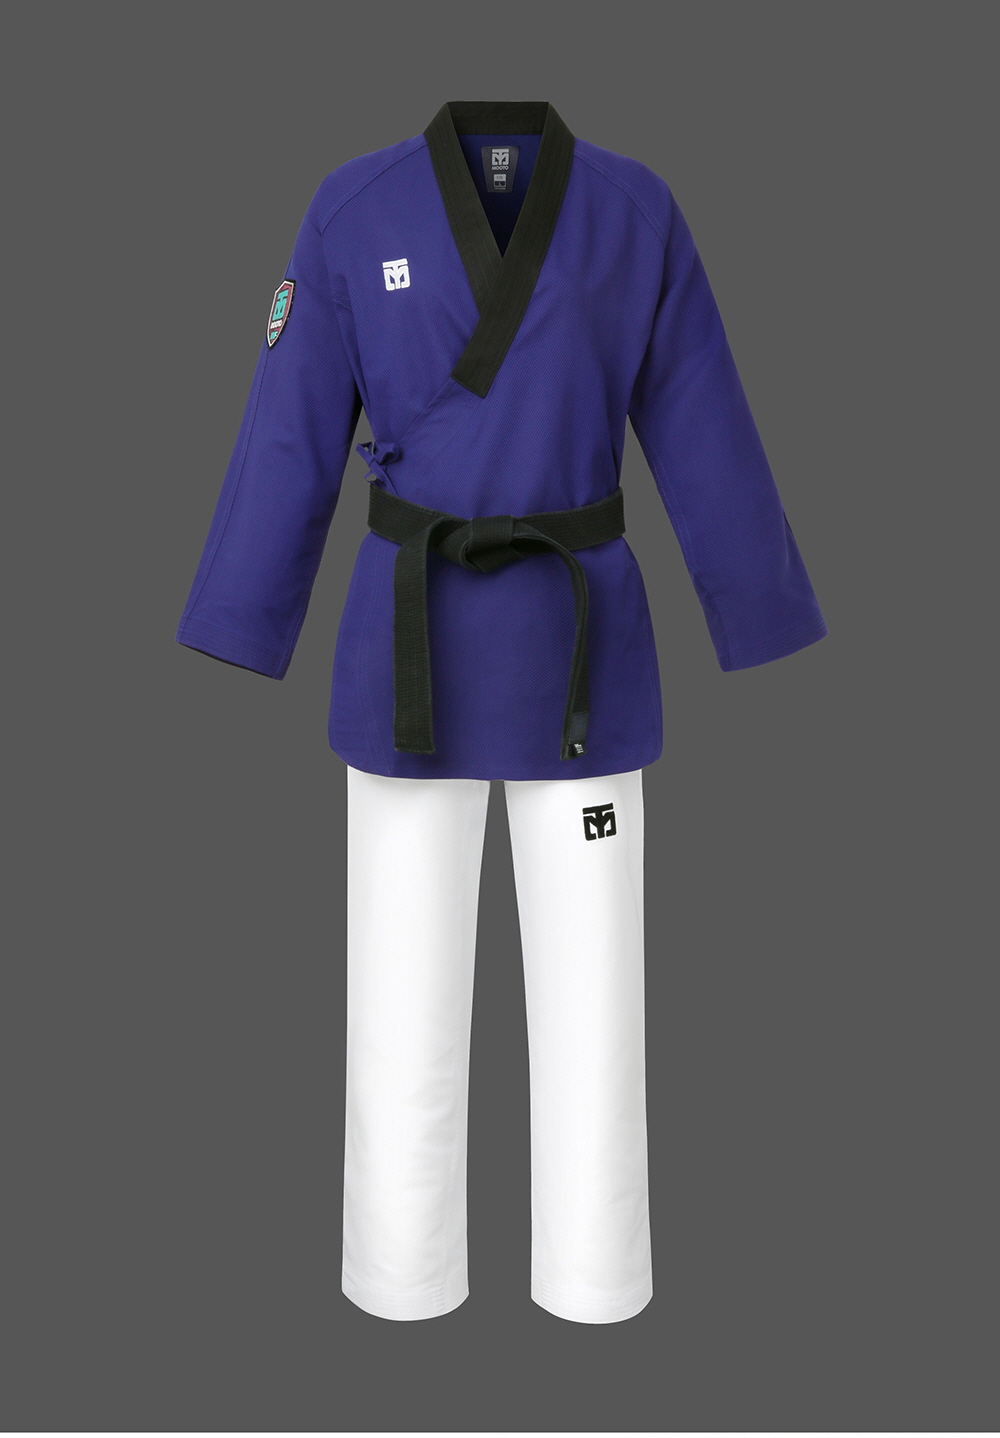 MOOTO 3FW-2 Demonstration Uniform (Ultraviolet)